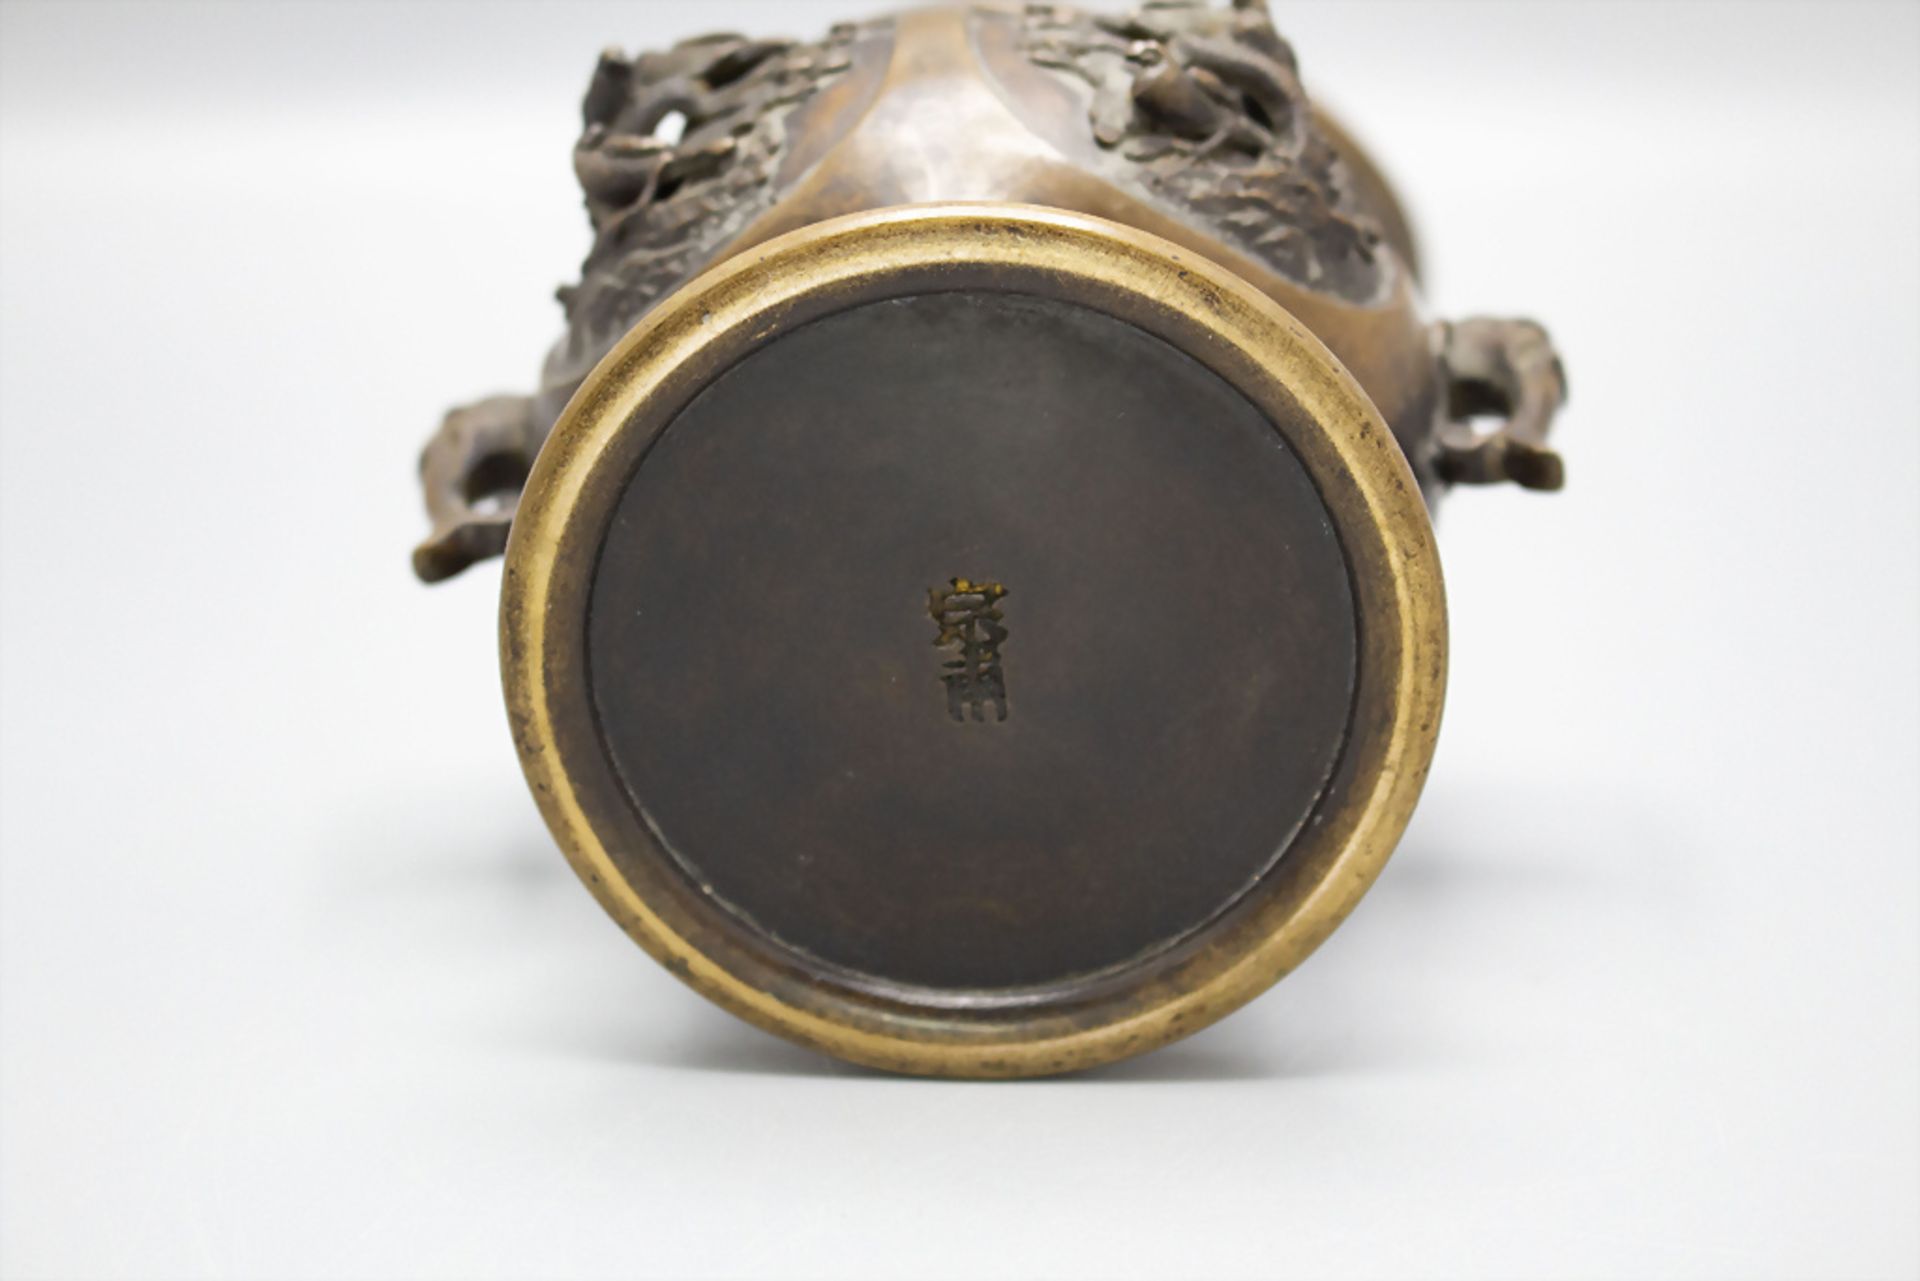 Koro-Räuchergefäß / A Koro incense vessel, Meiji-Periode, Japan, um 1900 - Image 7 of 7